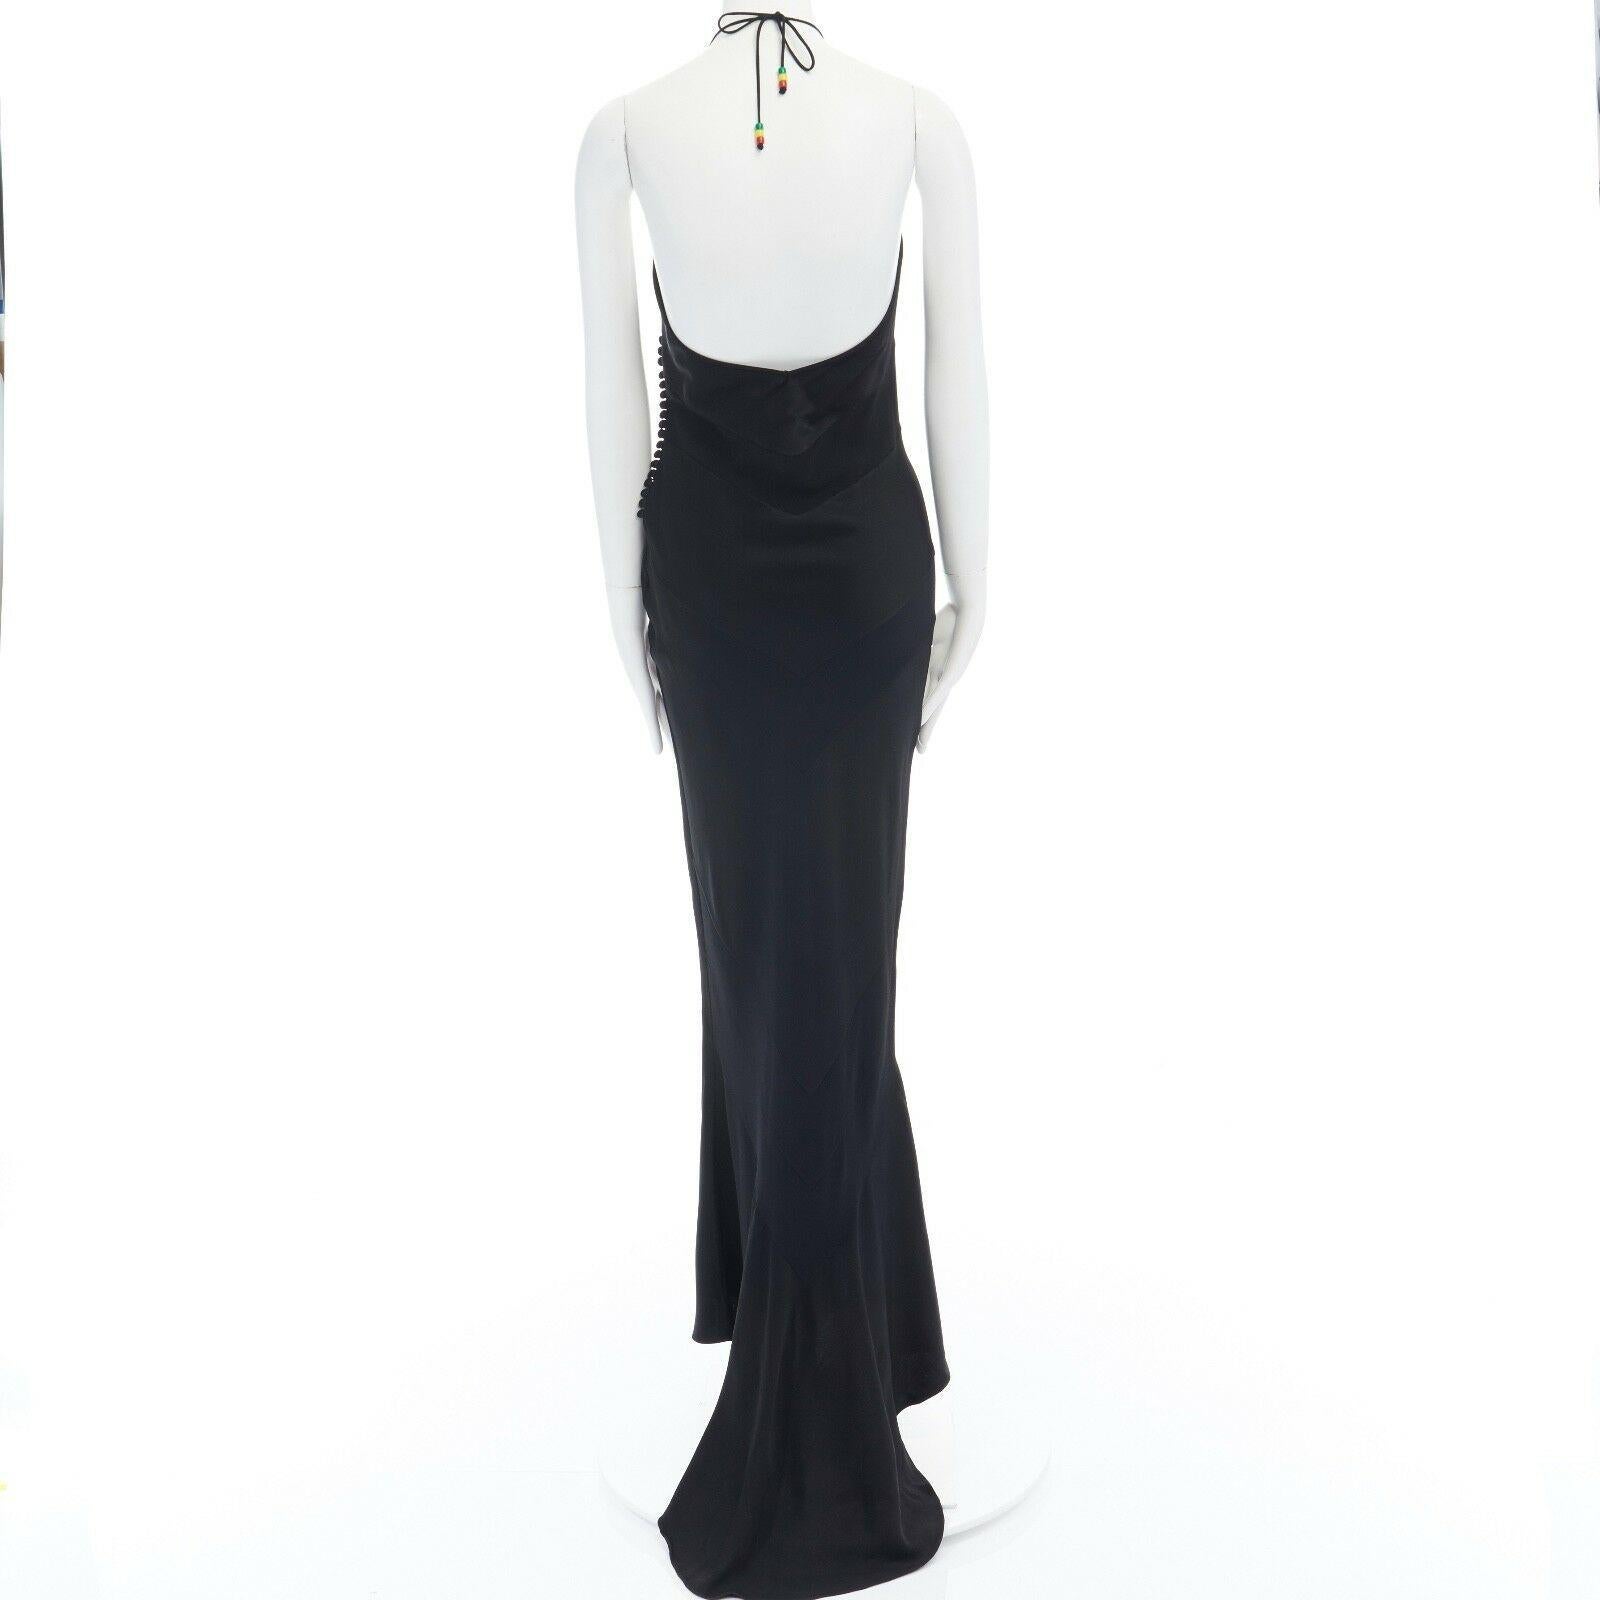 Women's CHRISTIAN DIOR GALLIANO black halter keyhole backless dress gown FR40 US8 UK12 L